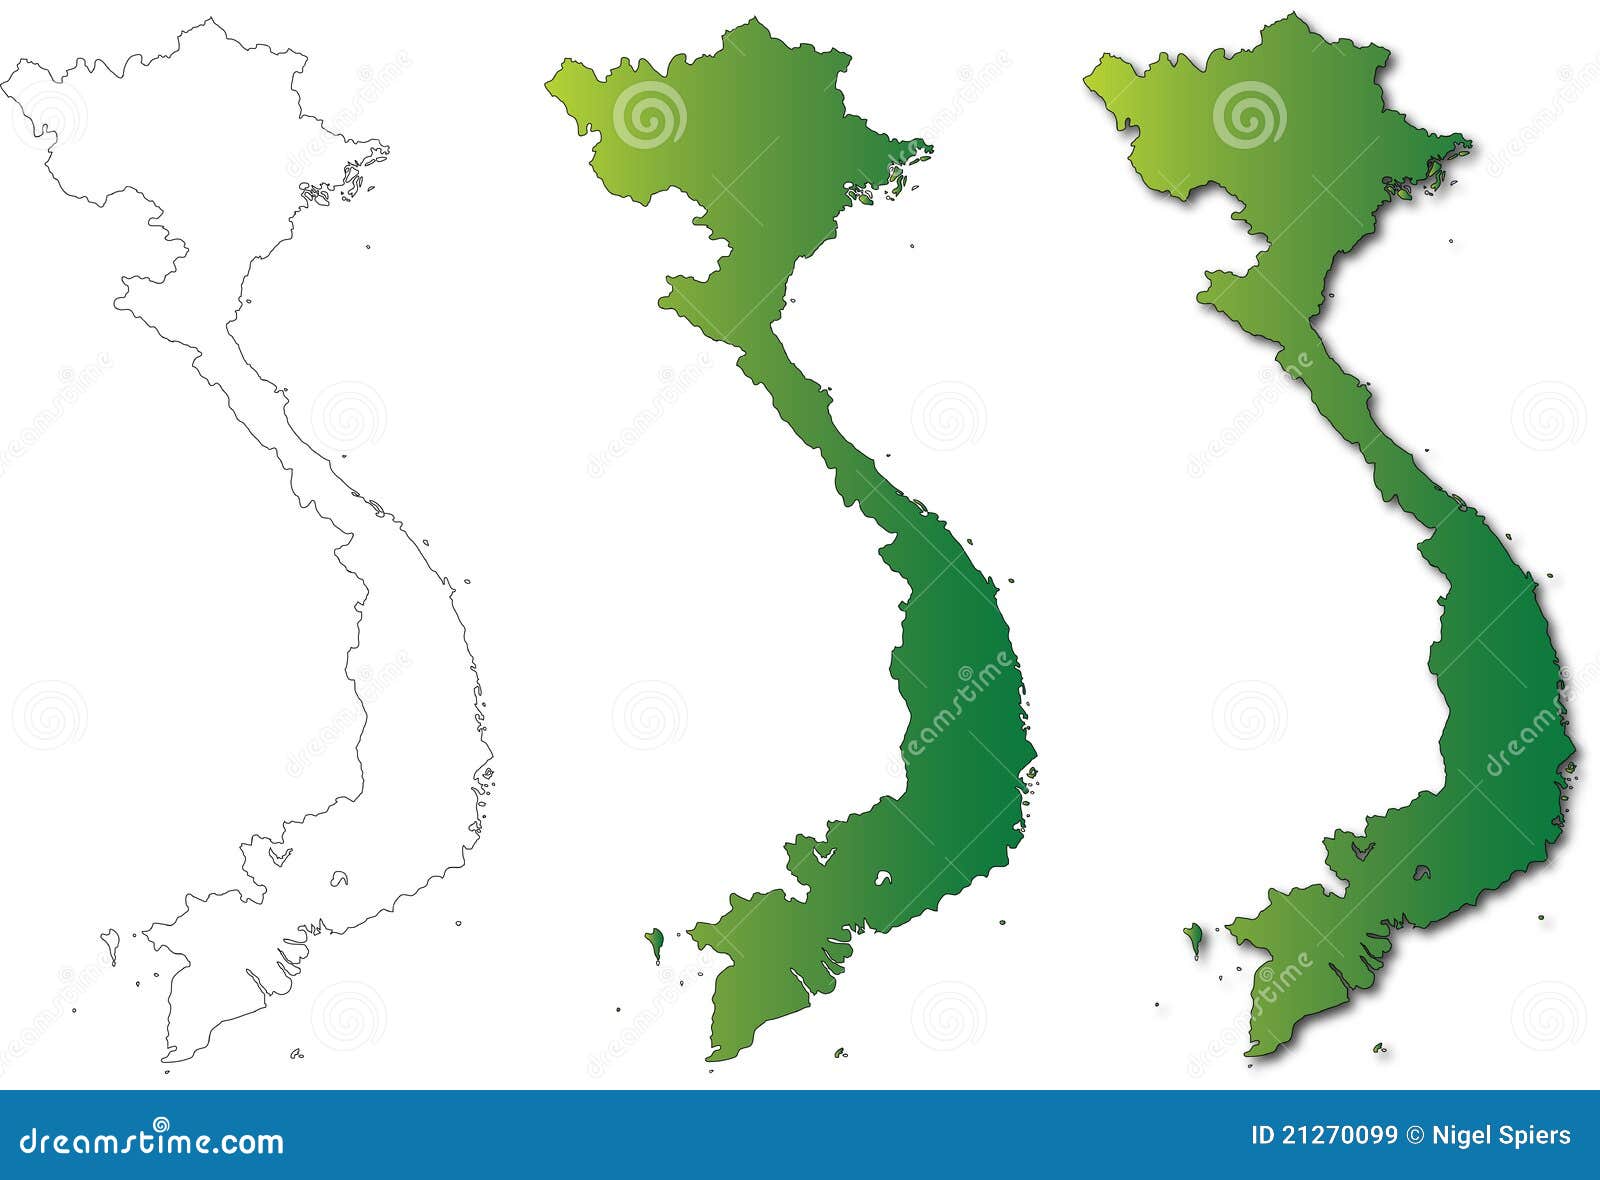 clipart map of vietnam - photo #9